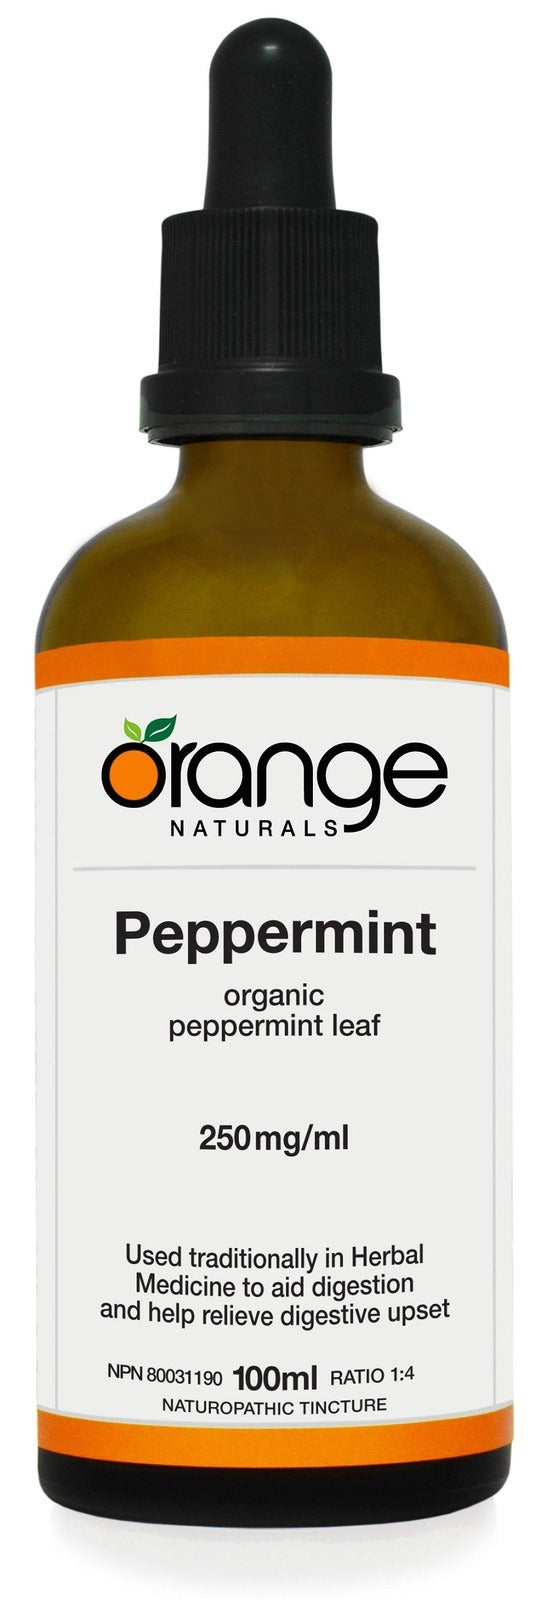 Orange Naturals Peppermint 250 mg/mL 100 mL Image 1